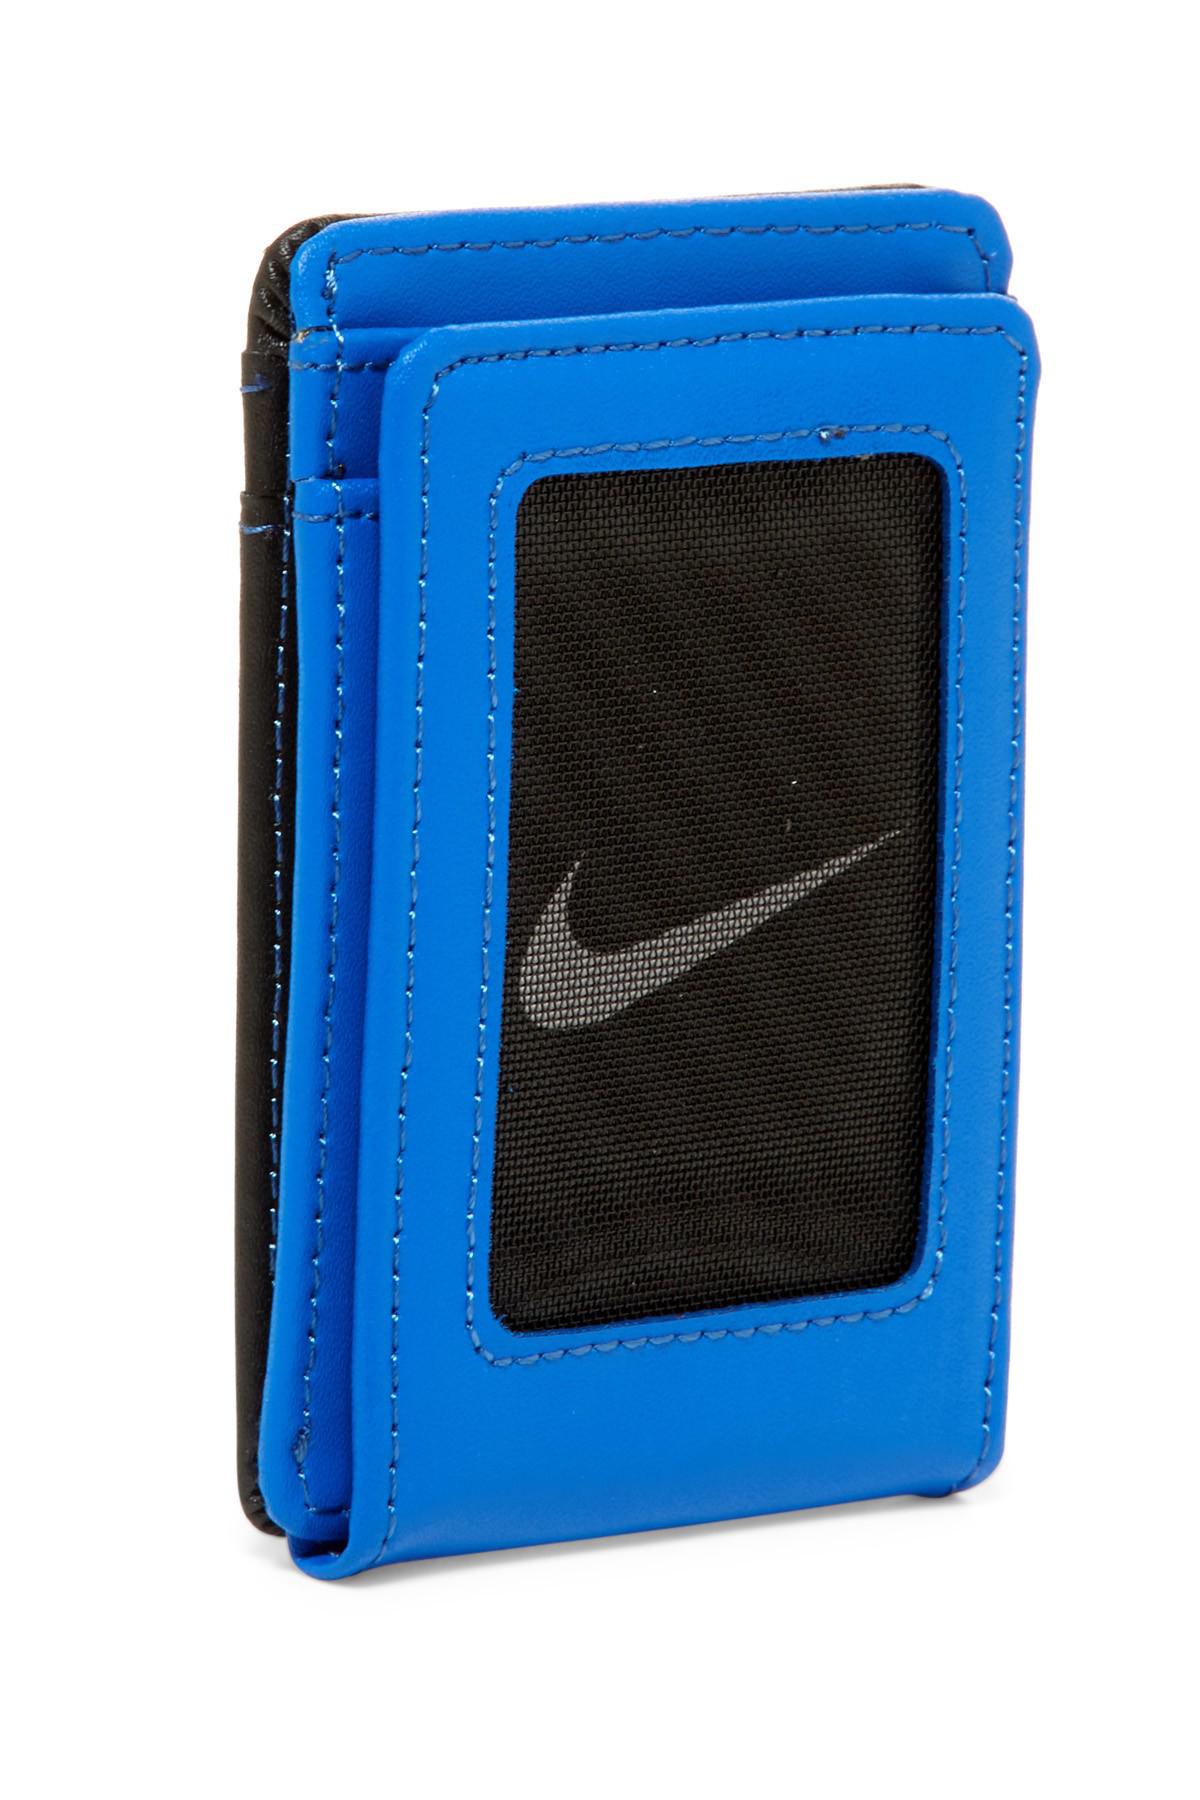 Lyst - Nike Leather Block Front Pocket Wallet in Blue for Men